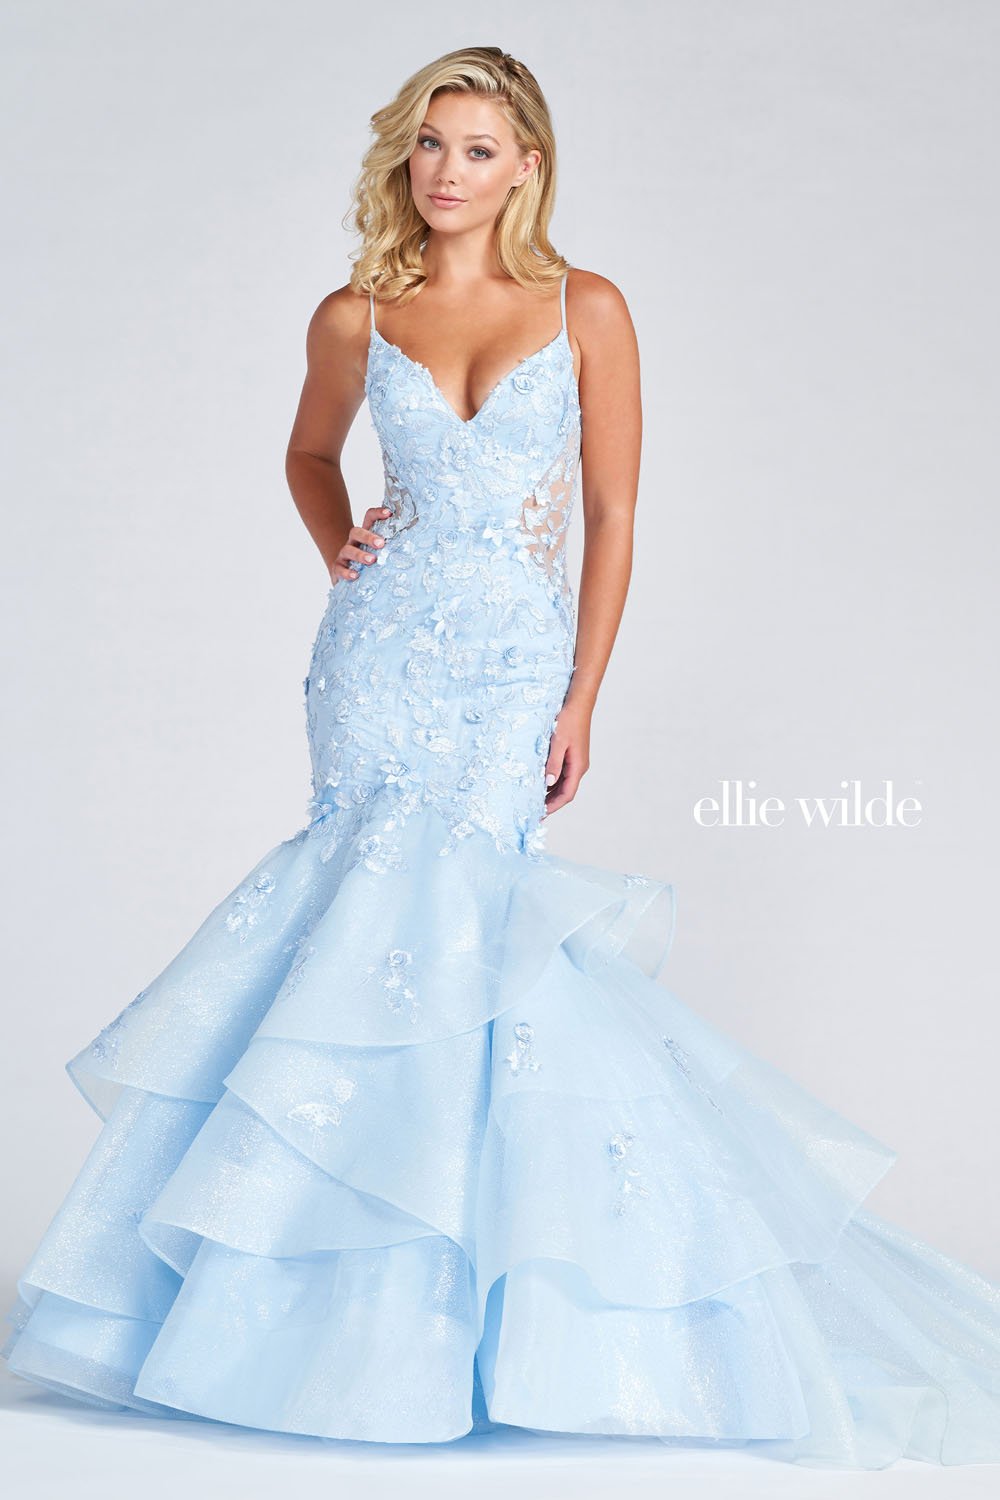 Ellie Wilde Light Blue EW122055 Prom Dress Image.  Light Blue formal dress.